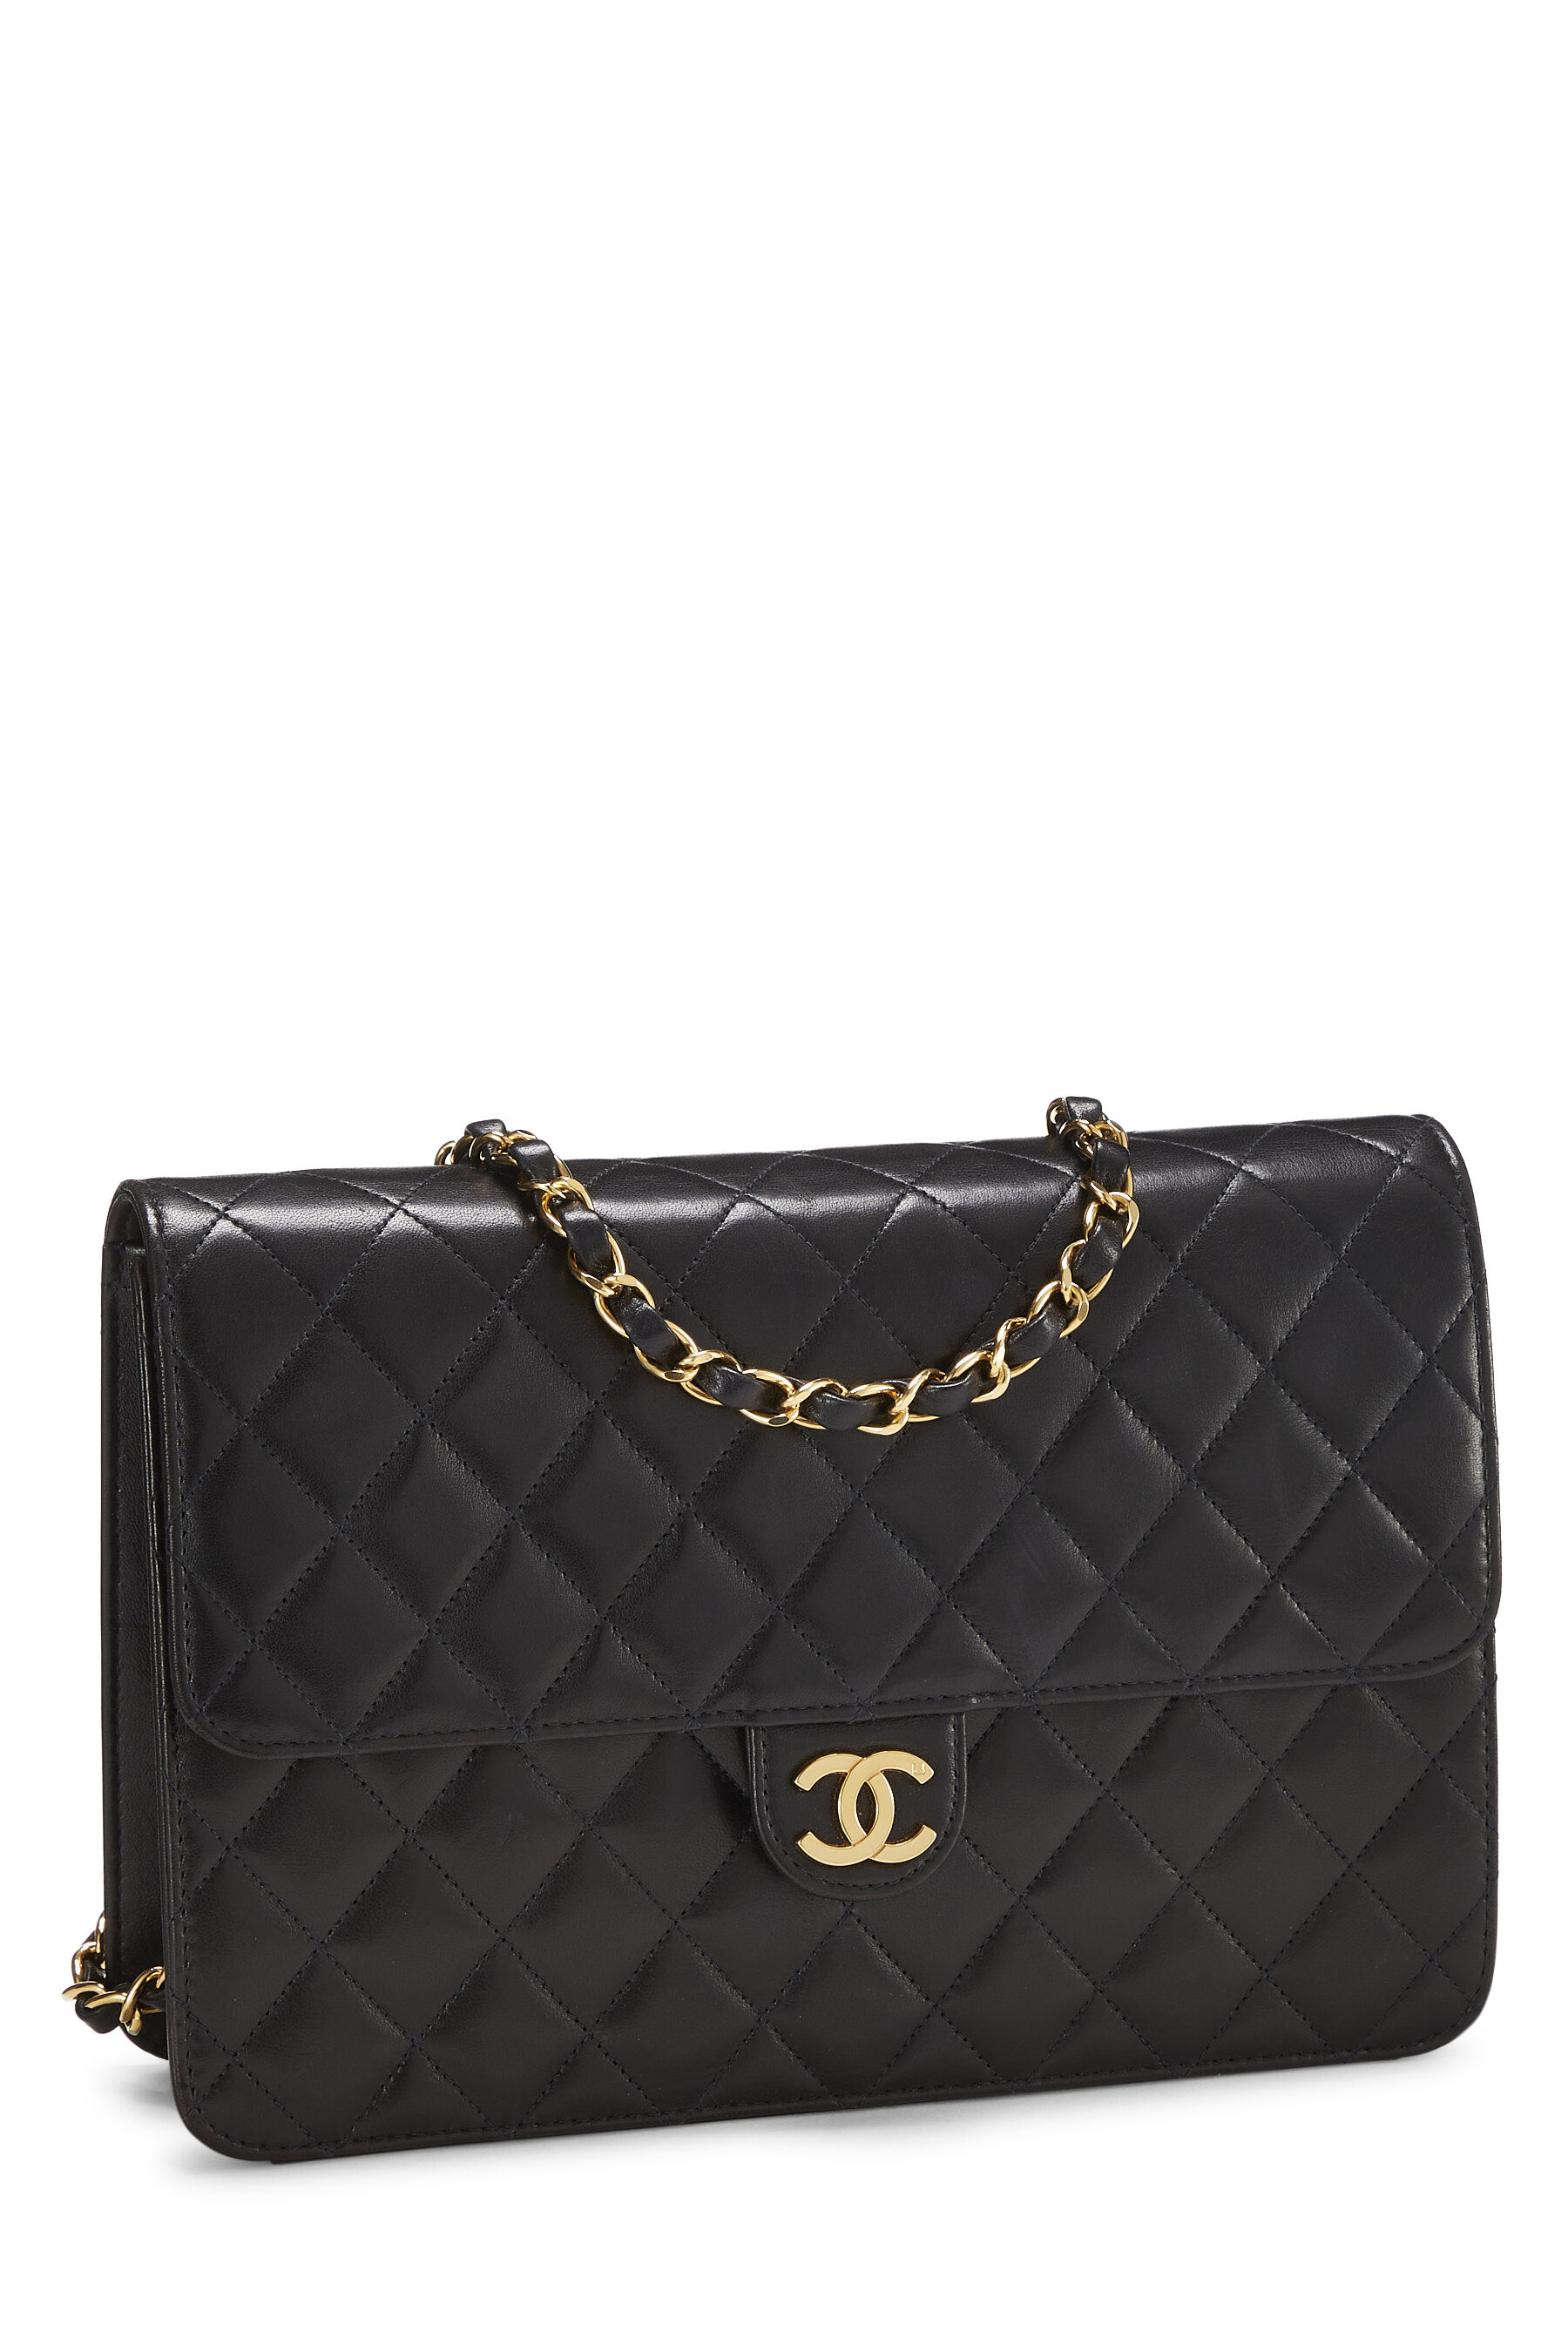 Chanel Classic Flap 94305 Nsz Black Lamb Bag